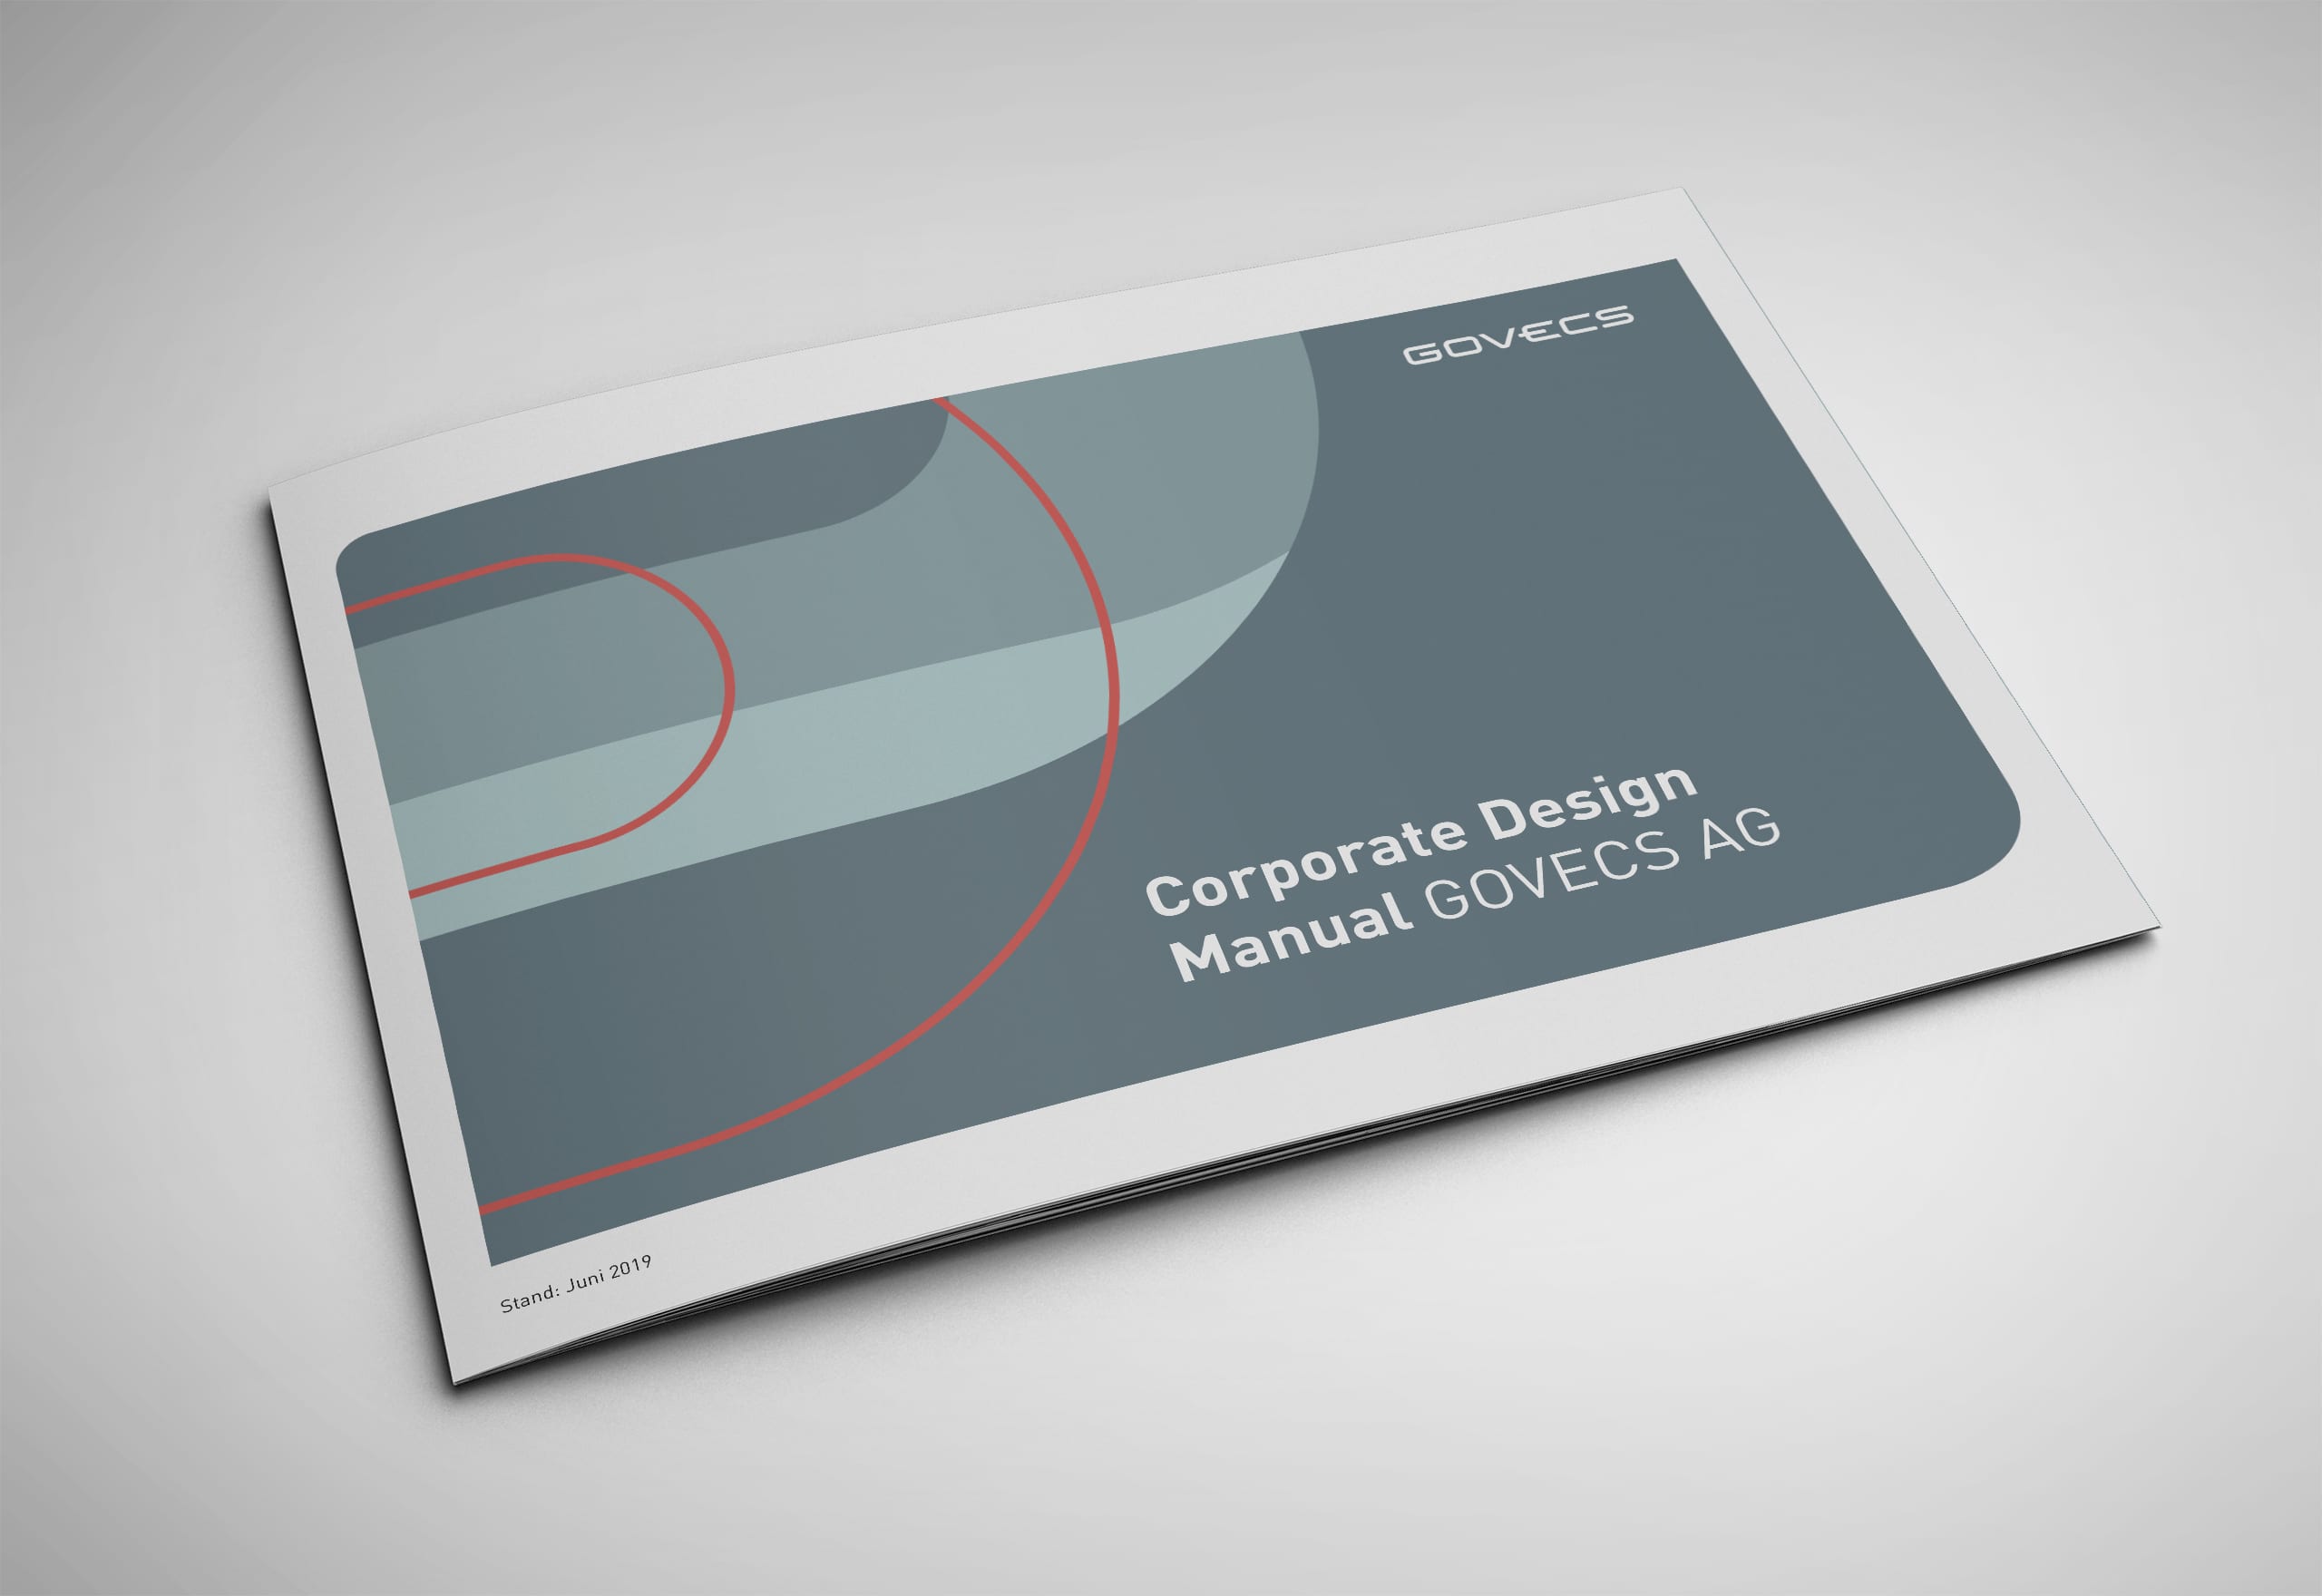 Corporate Design Manual Govecs AG